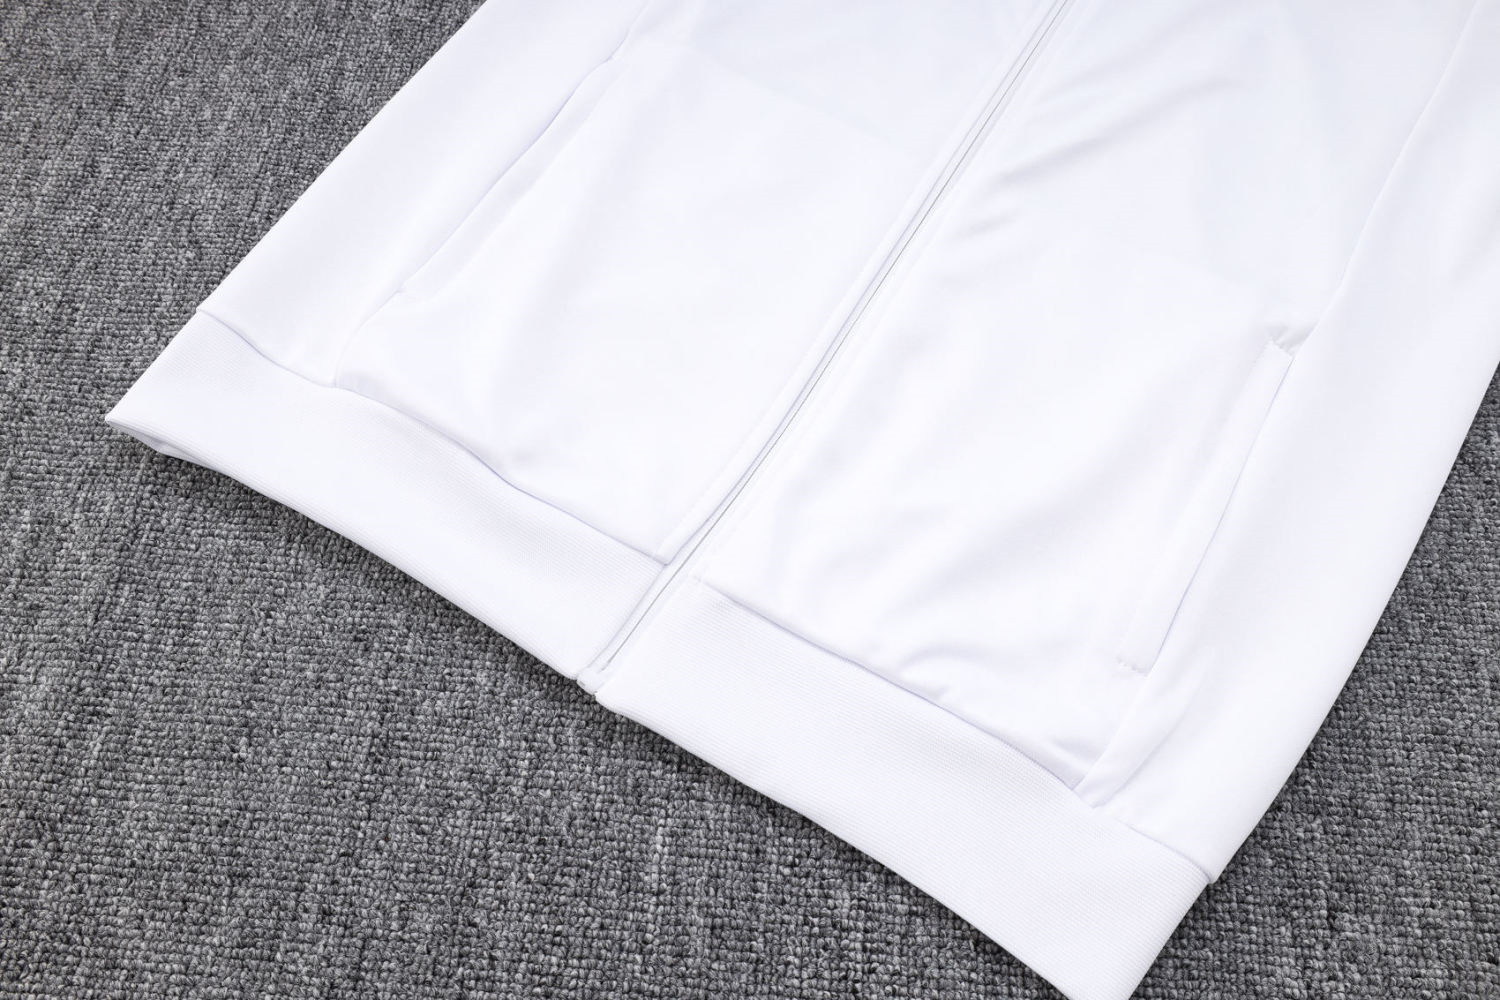 Italy Soccer Jacket + Pants Replica White 2023 Mens